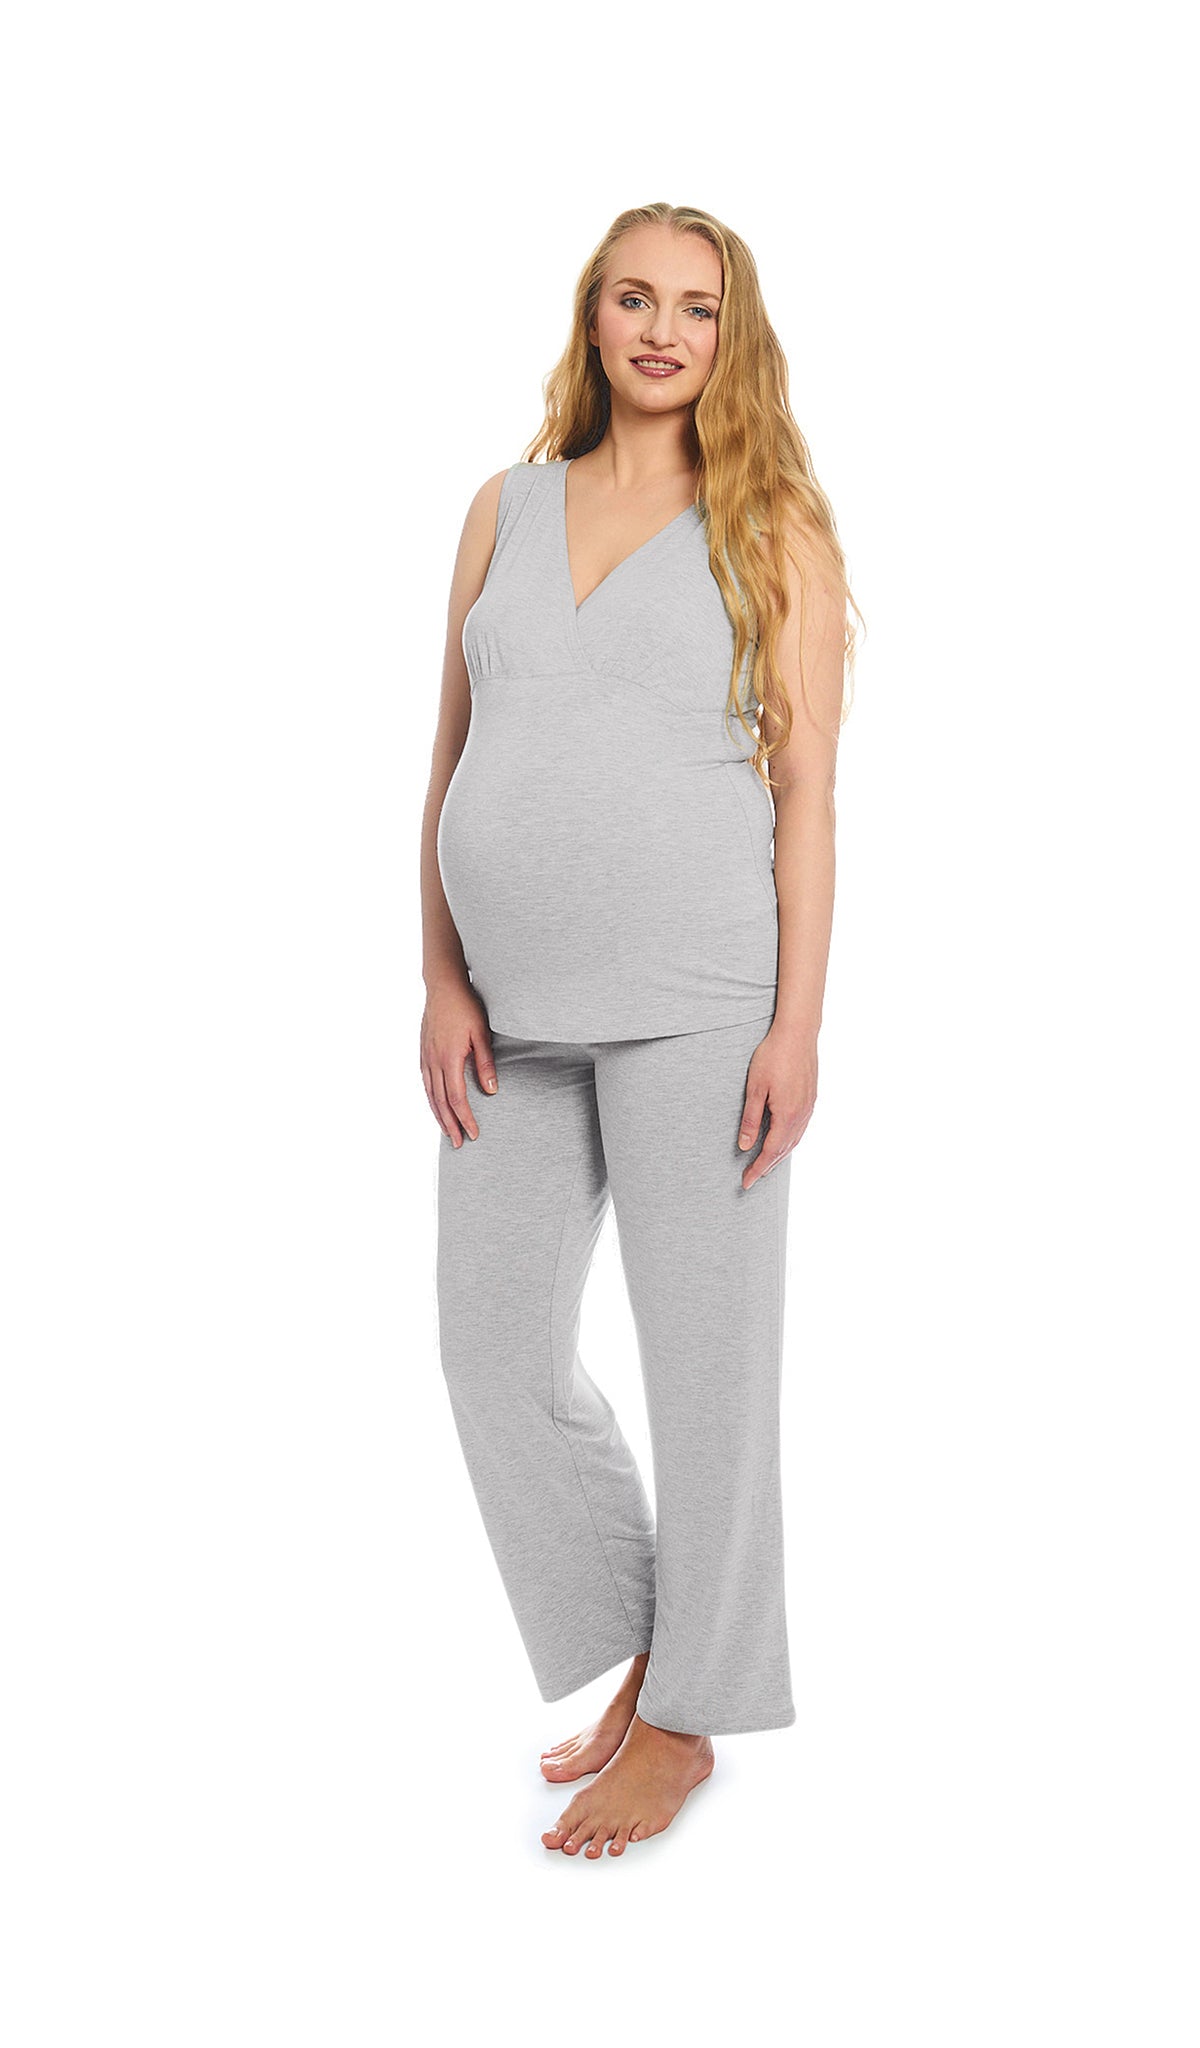 Everly Grey Women's Everly Grey Luana Maternity/Nursing Romper